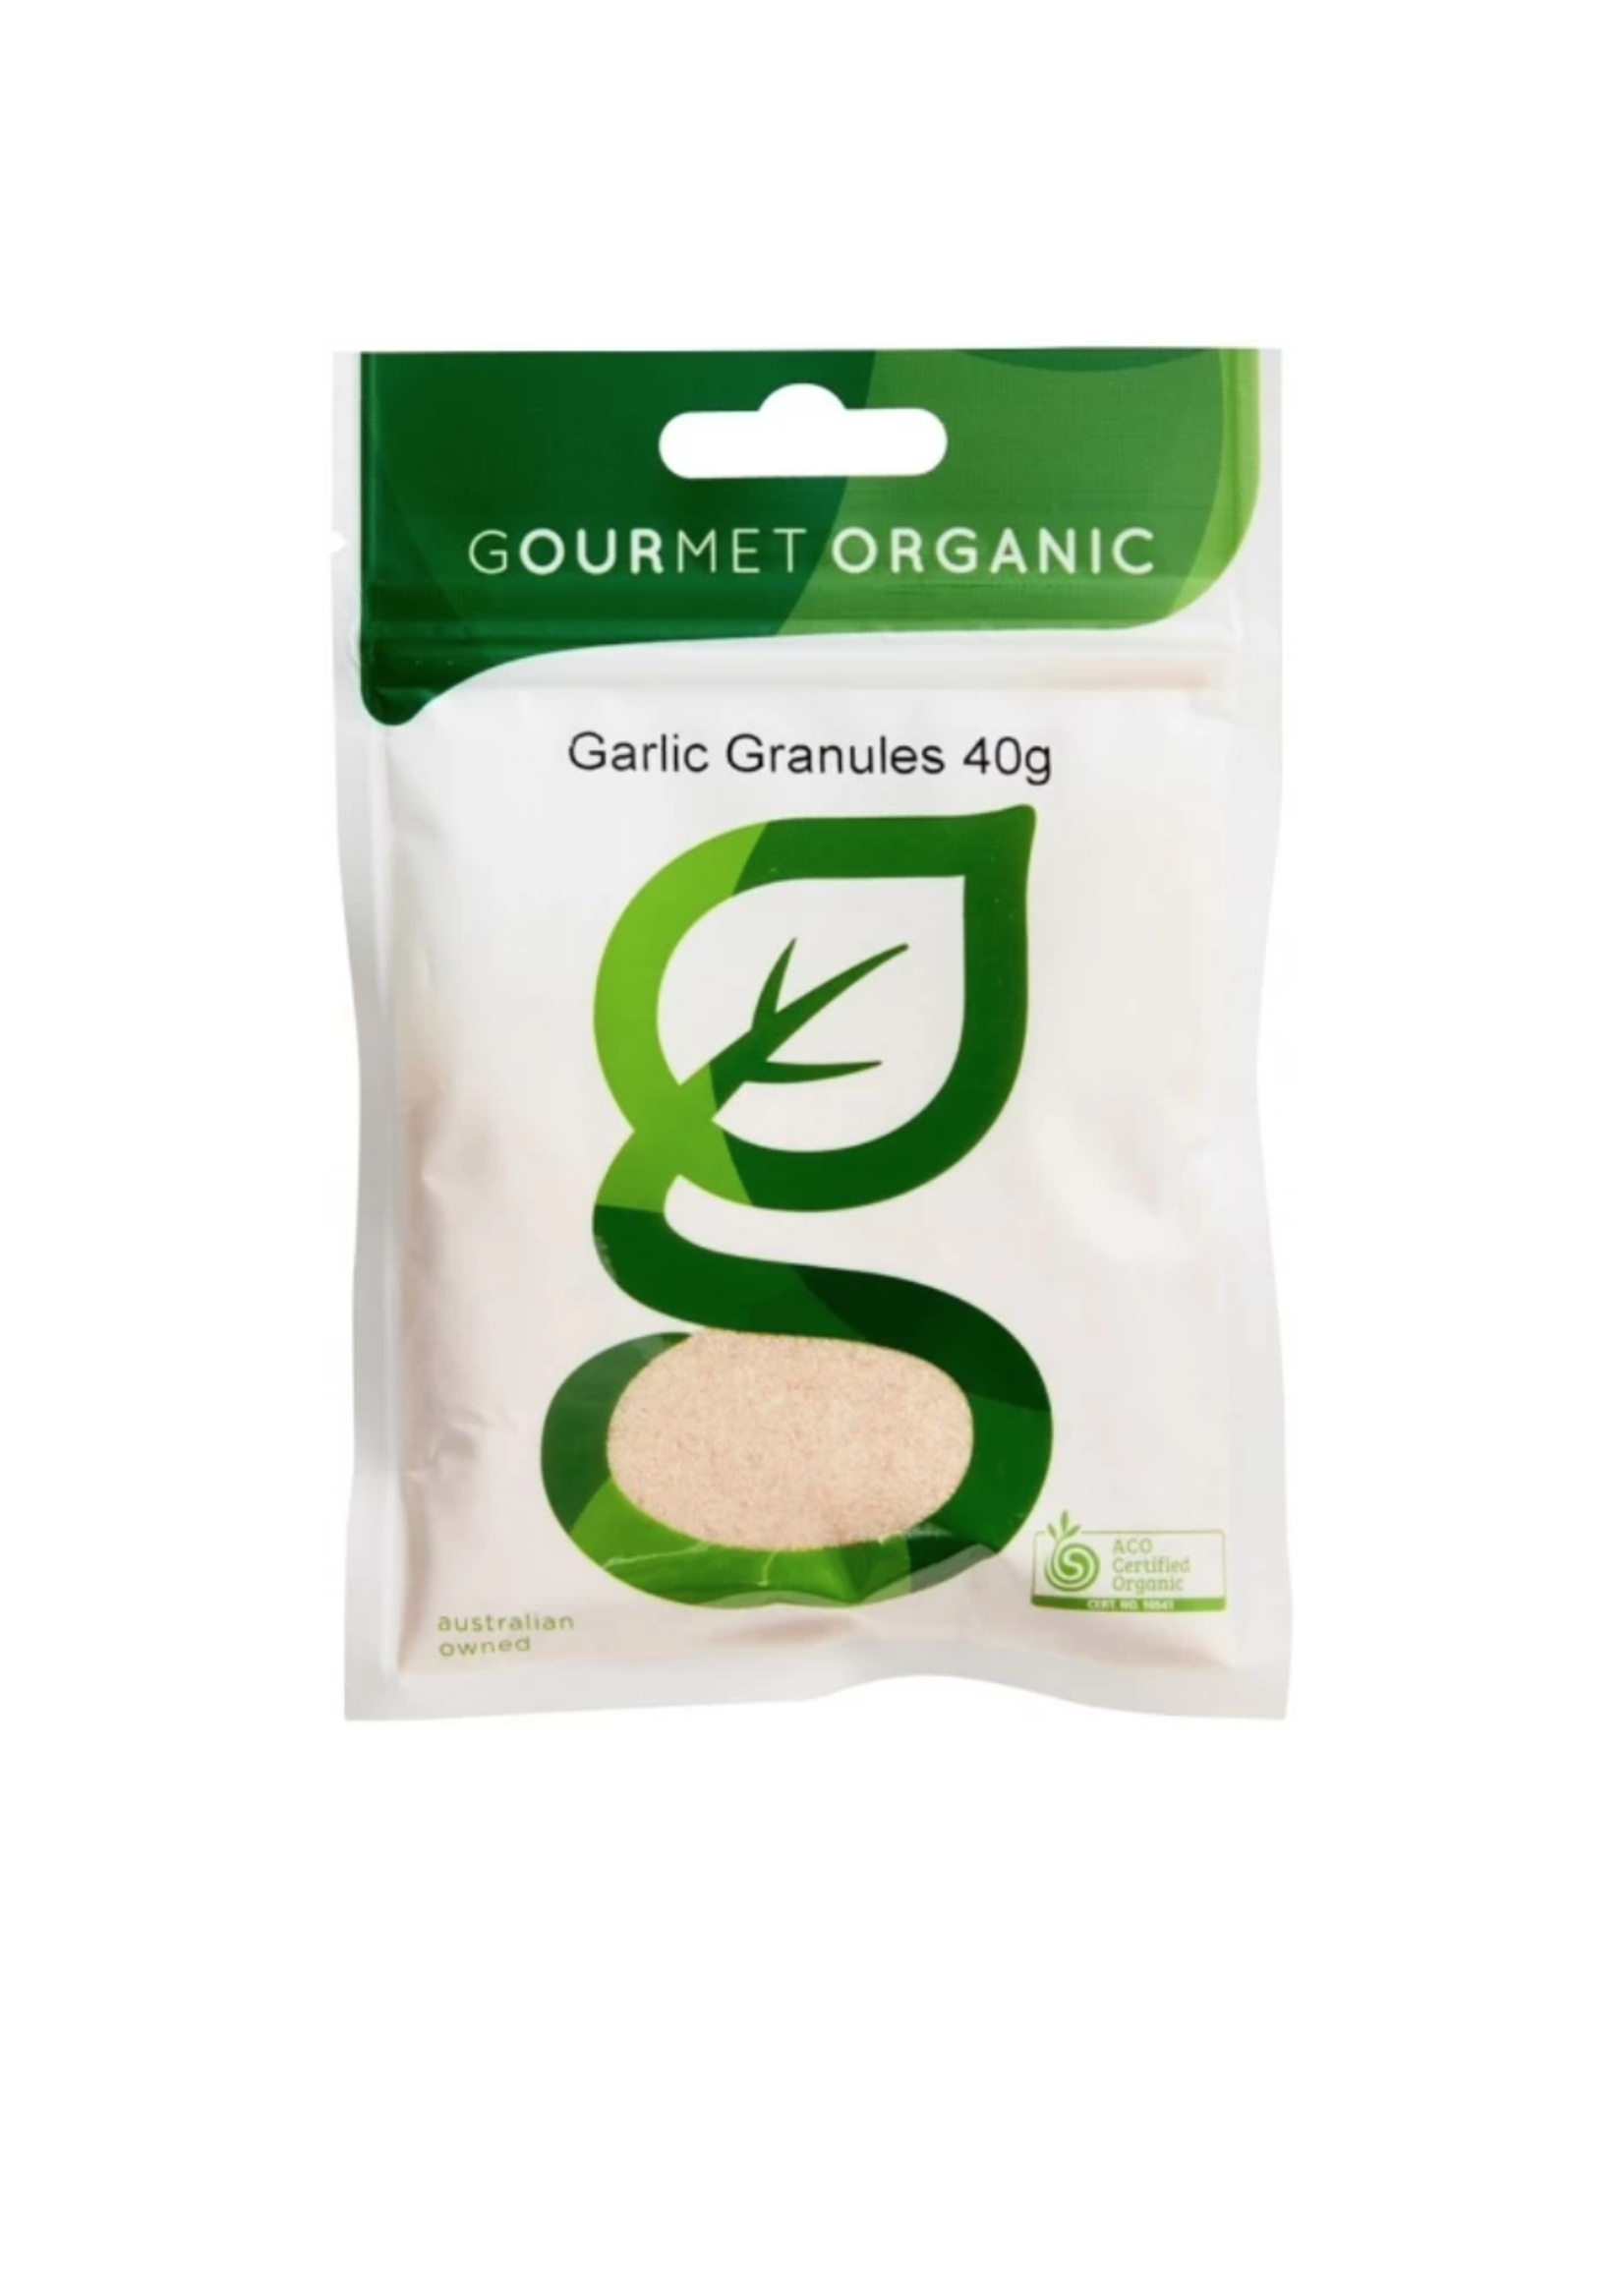 Gourmet Organic Herbs Gourmet Organic Garlic Granules 40g Sachet x 1